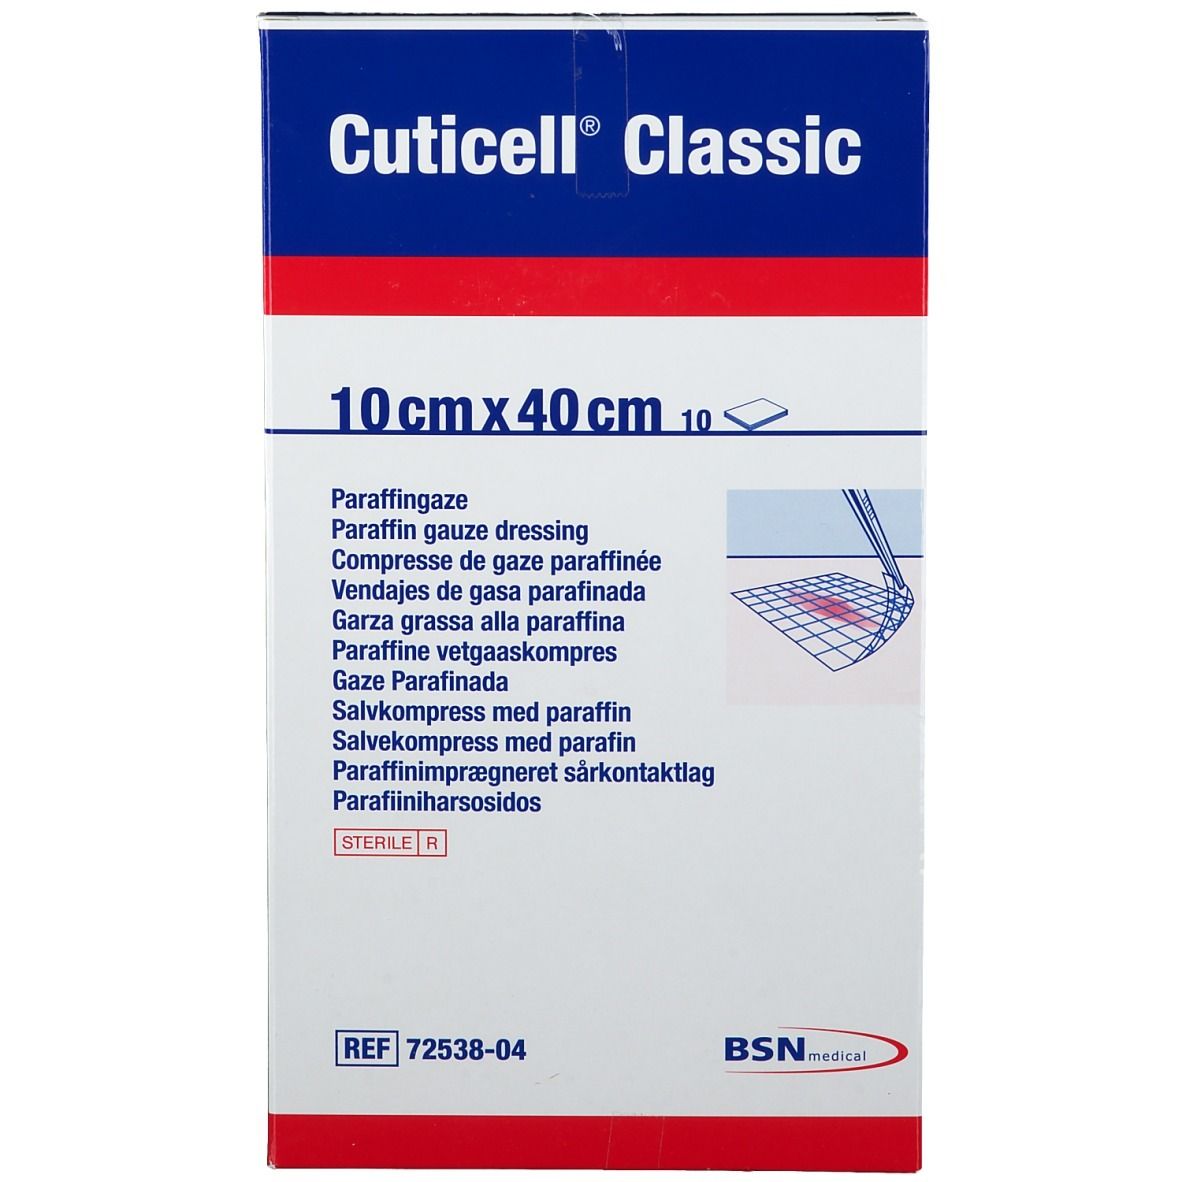 Cuticell® Classic Compresse de gaze parafinée 10 X 40 cm